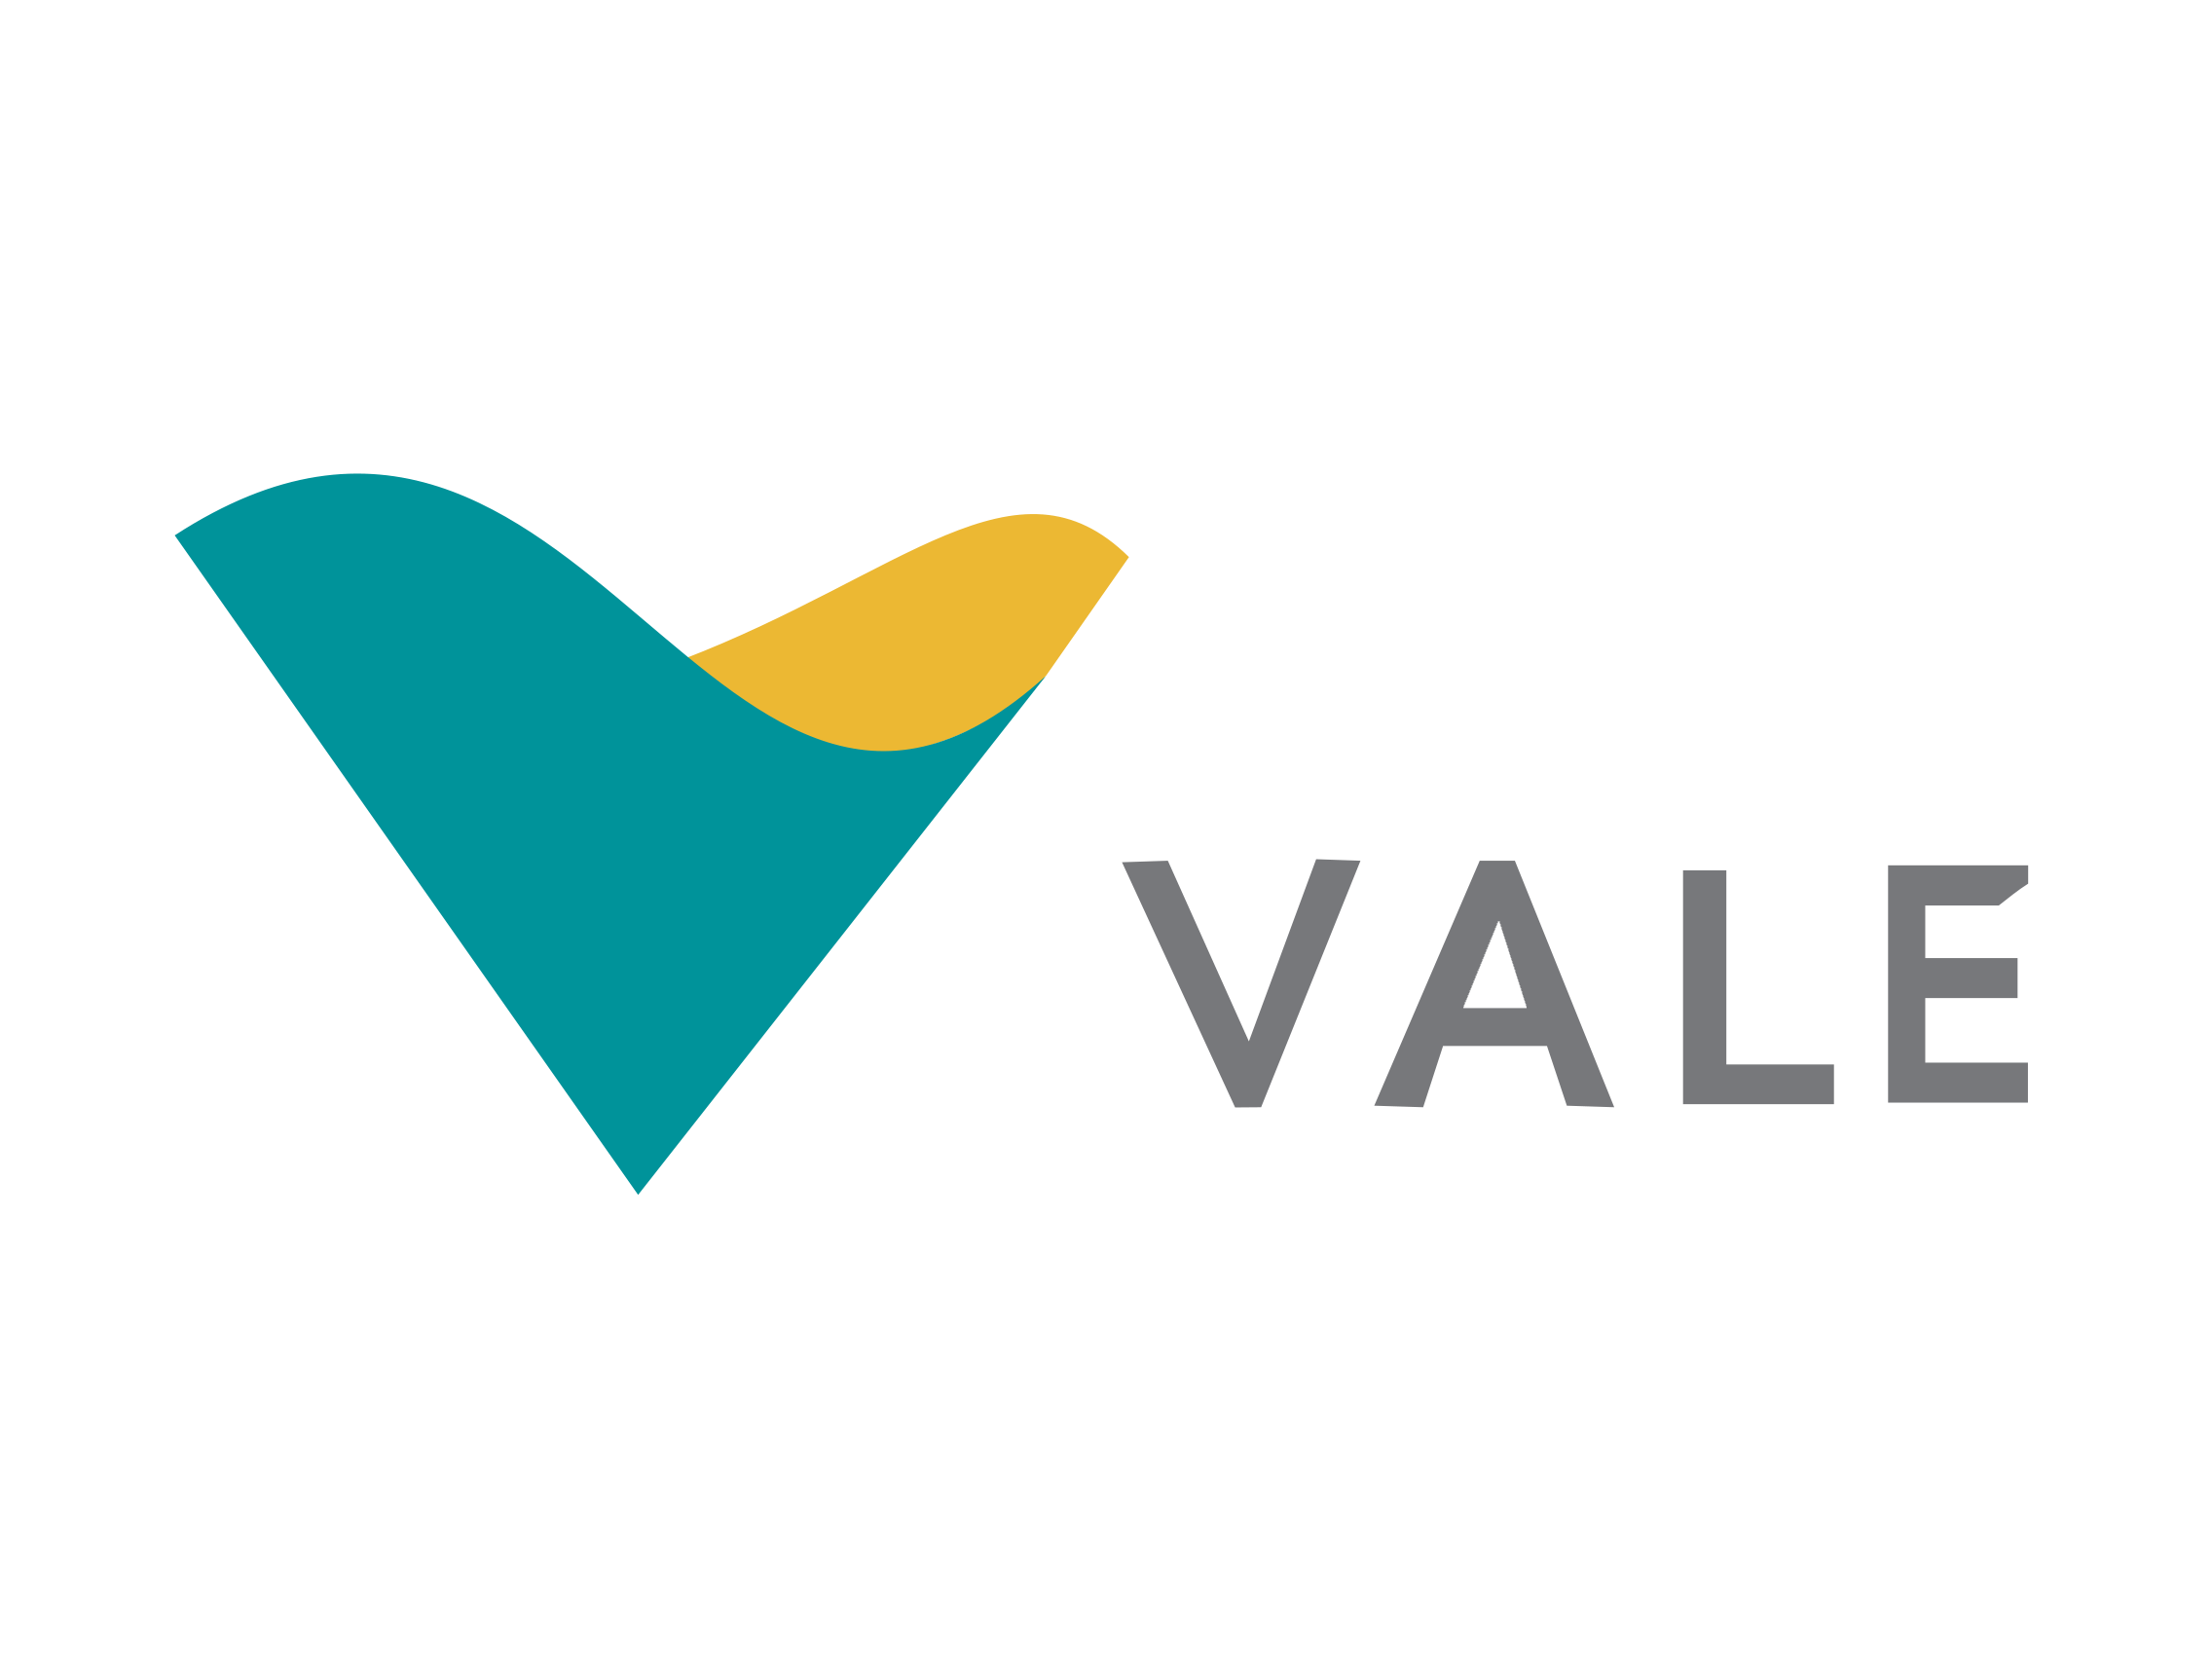 Vale Logo - Vale logo and wordmark